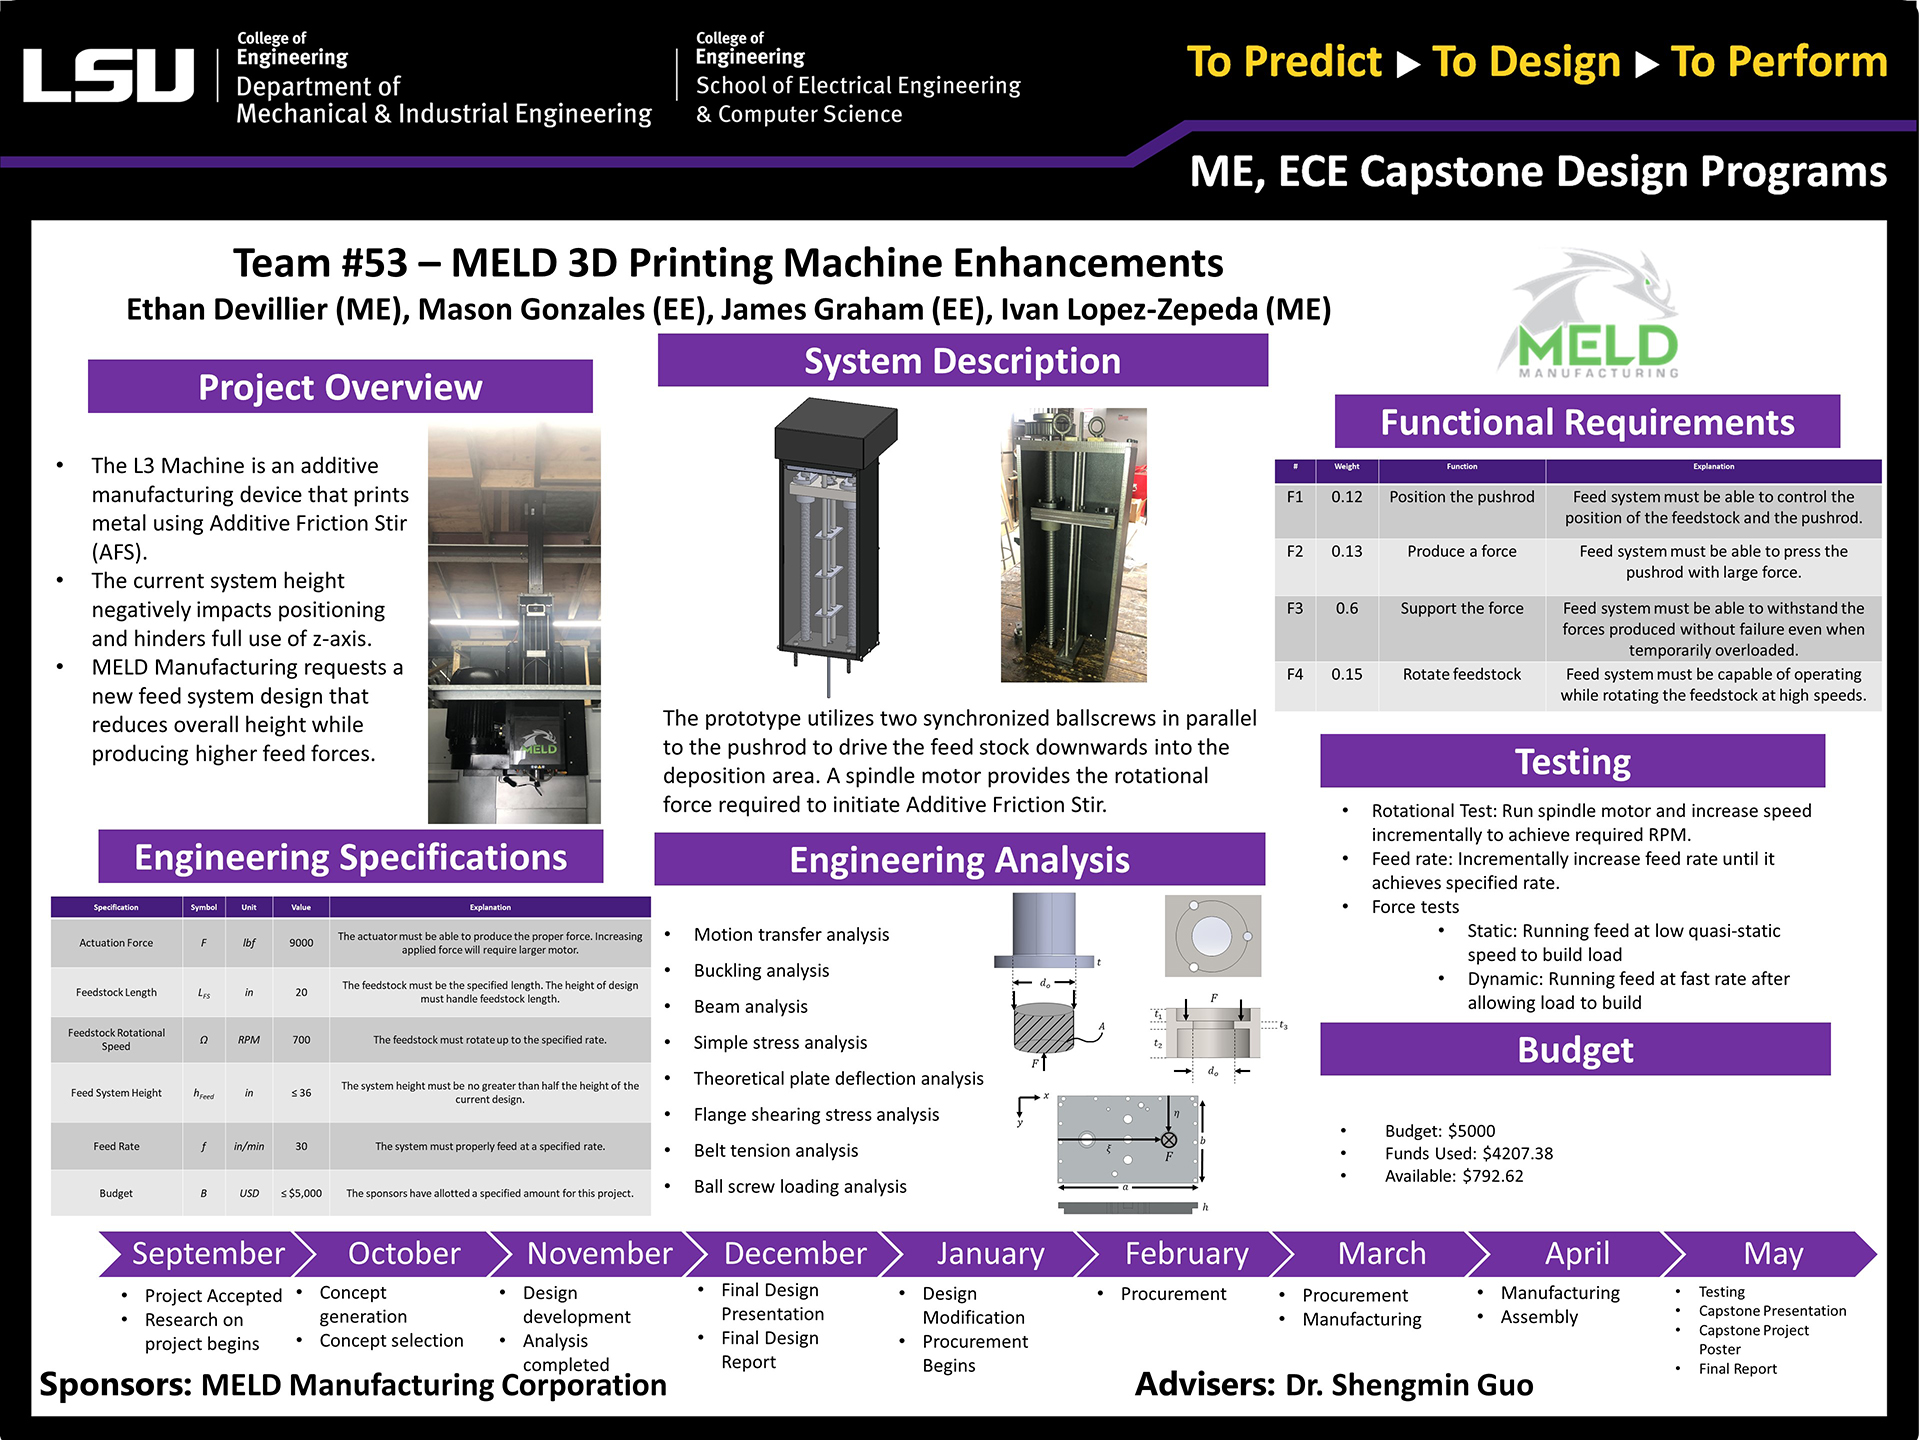 Project 53: MELD 3D Metal Printing Machine Enhancements (2022)